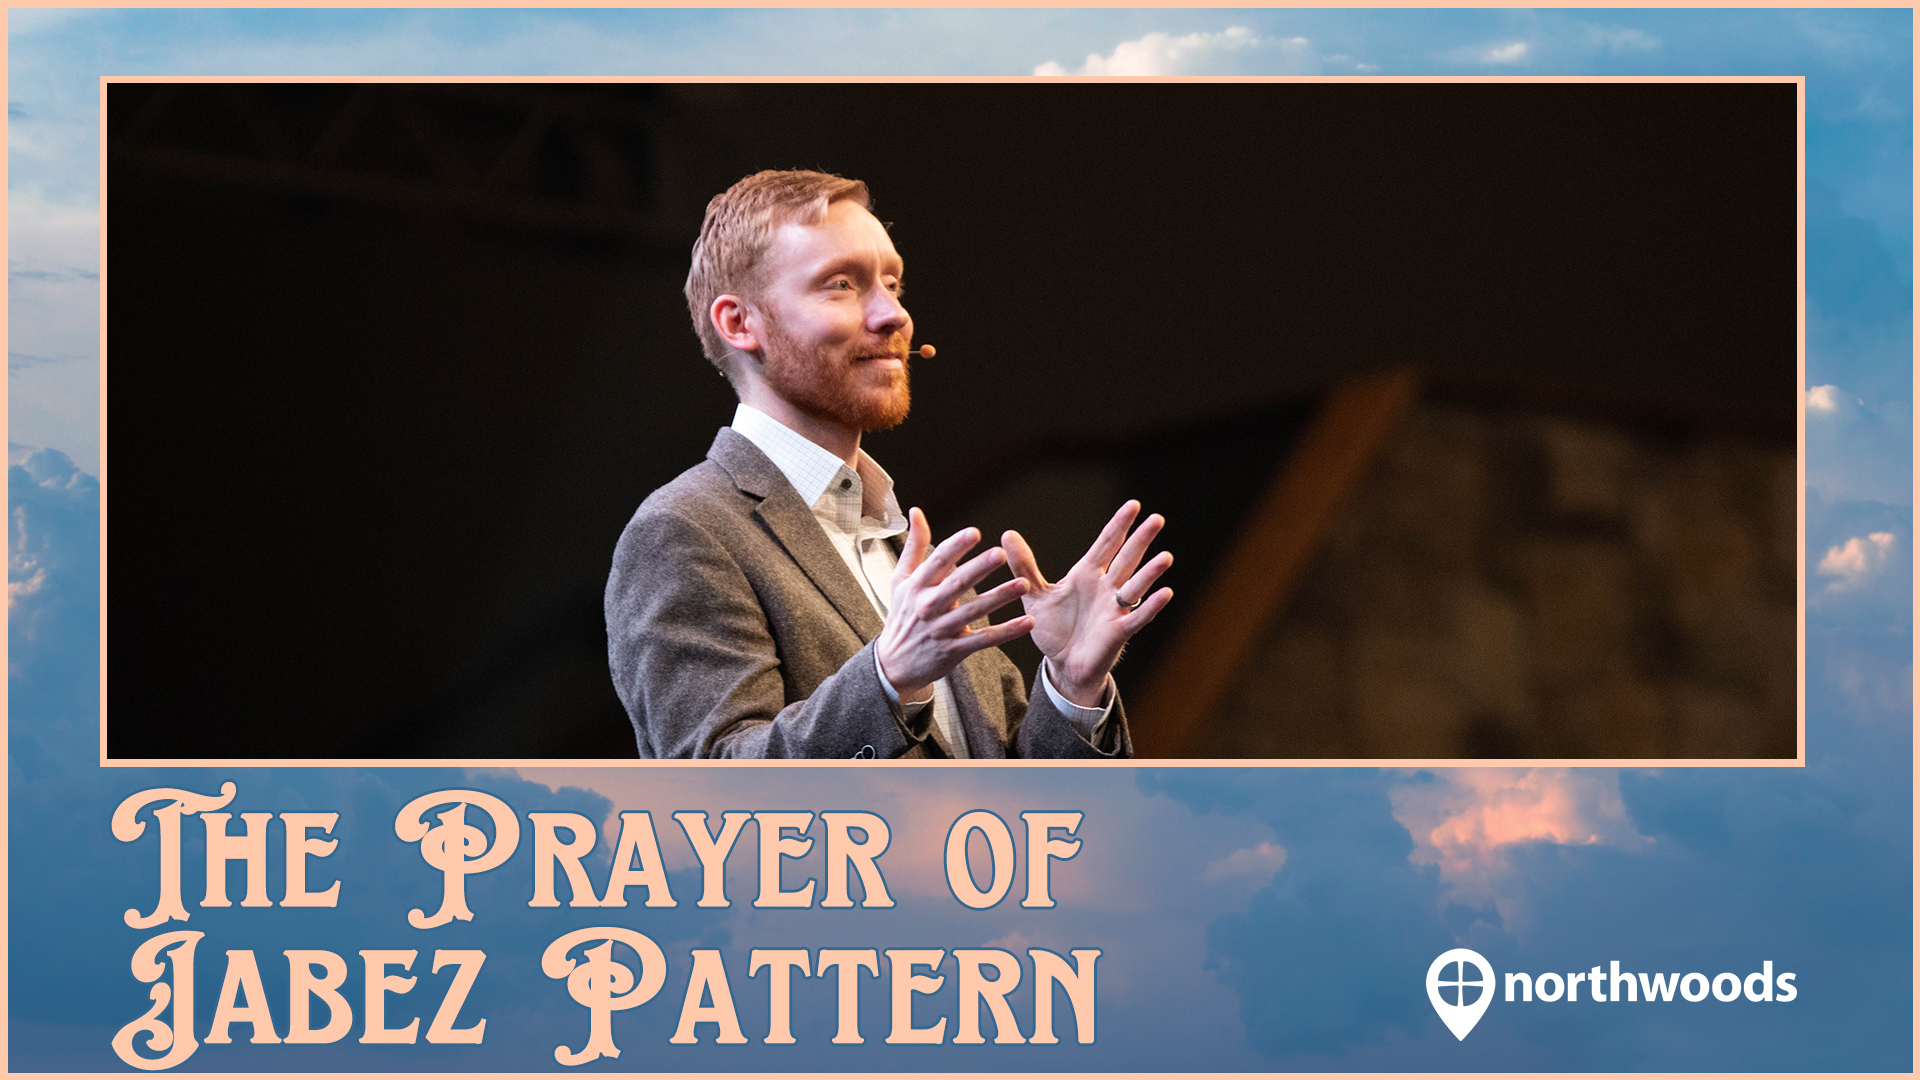 The Prayer Of Jabez Pattern